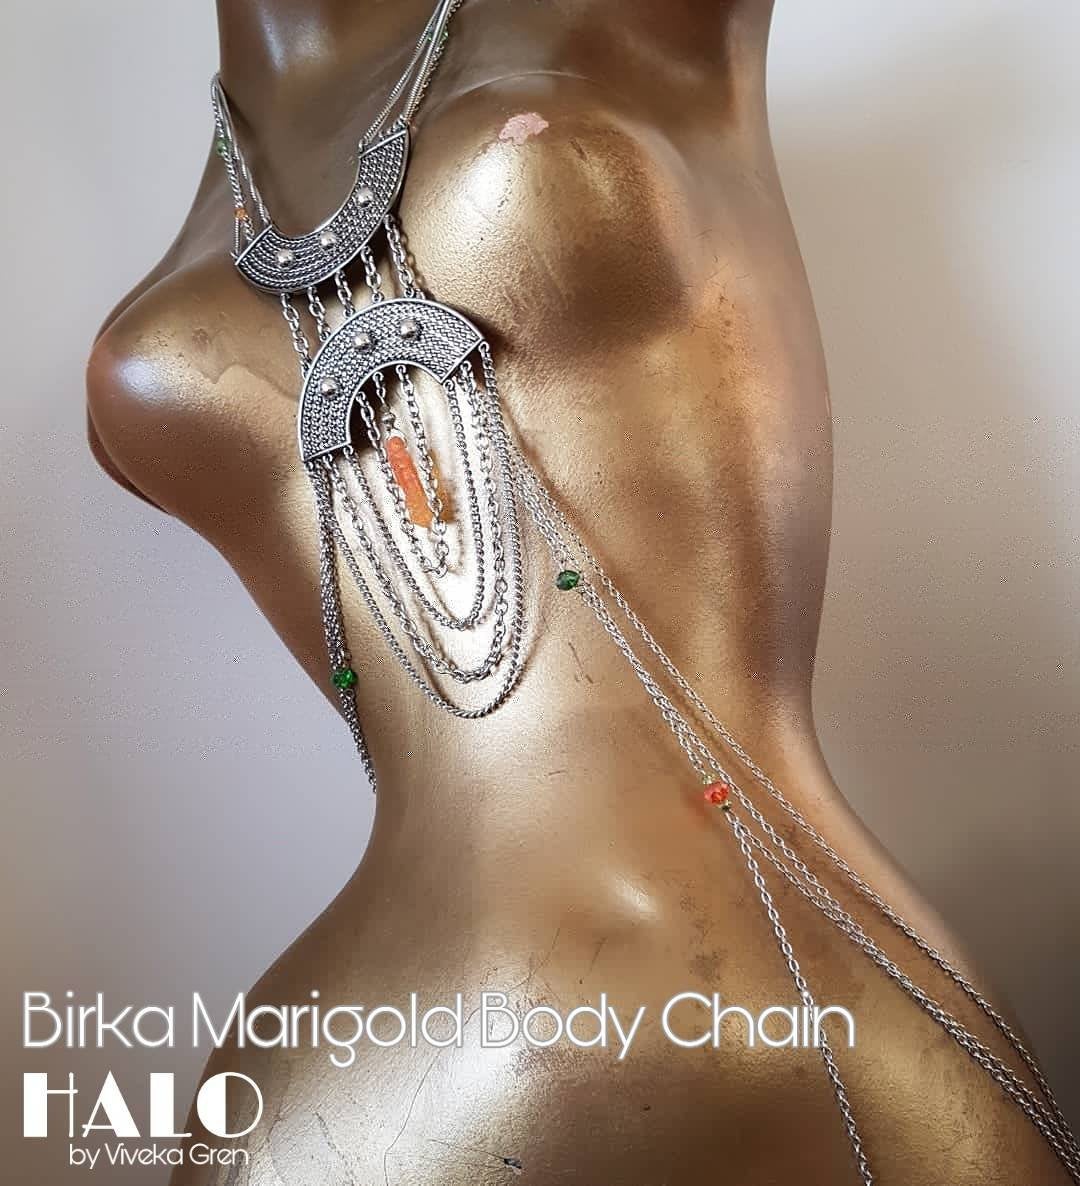 Fragments of Birka Mini Collection: the Birka Marigold Bodychain